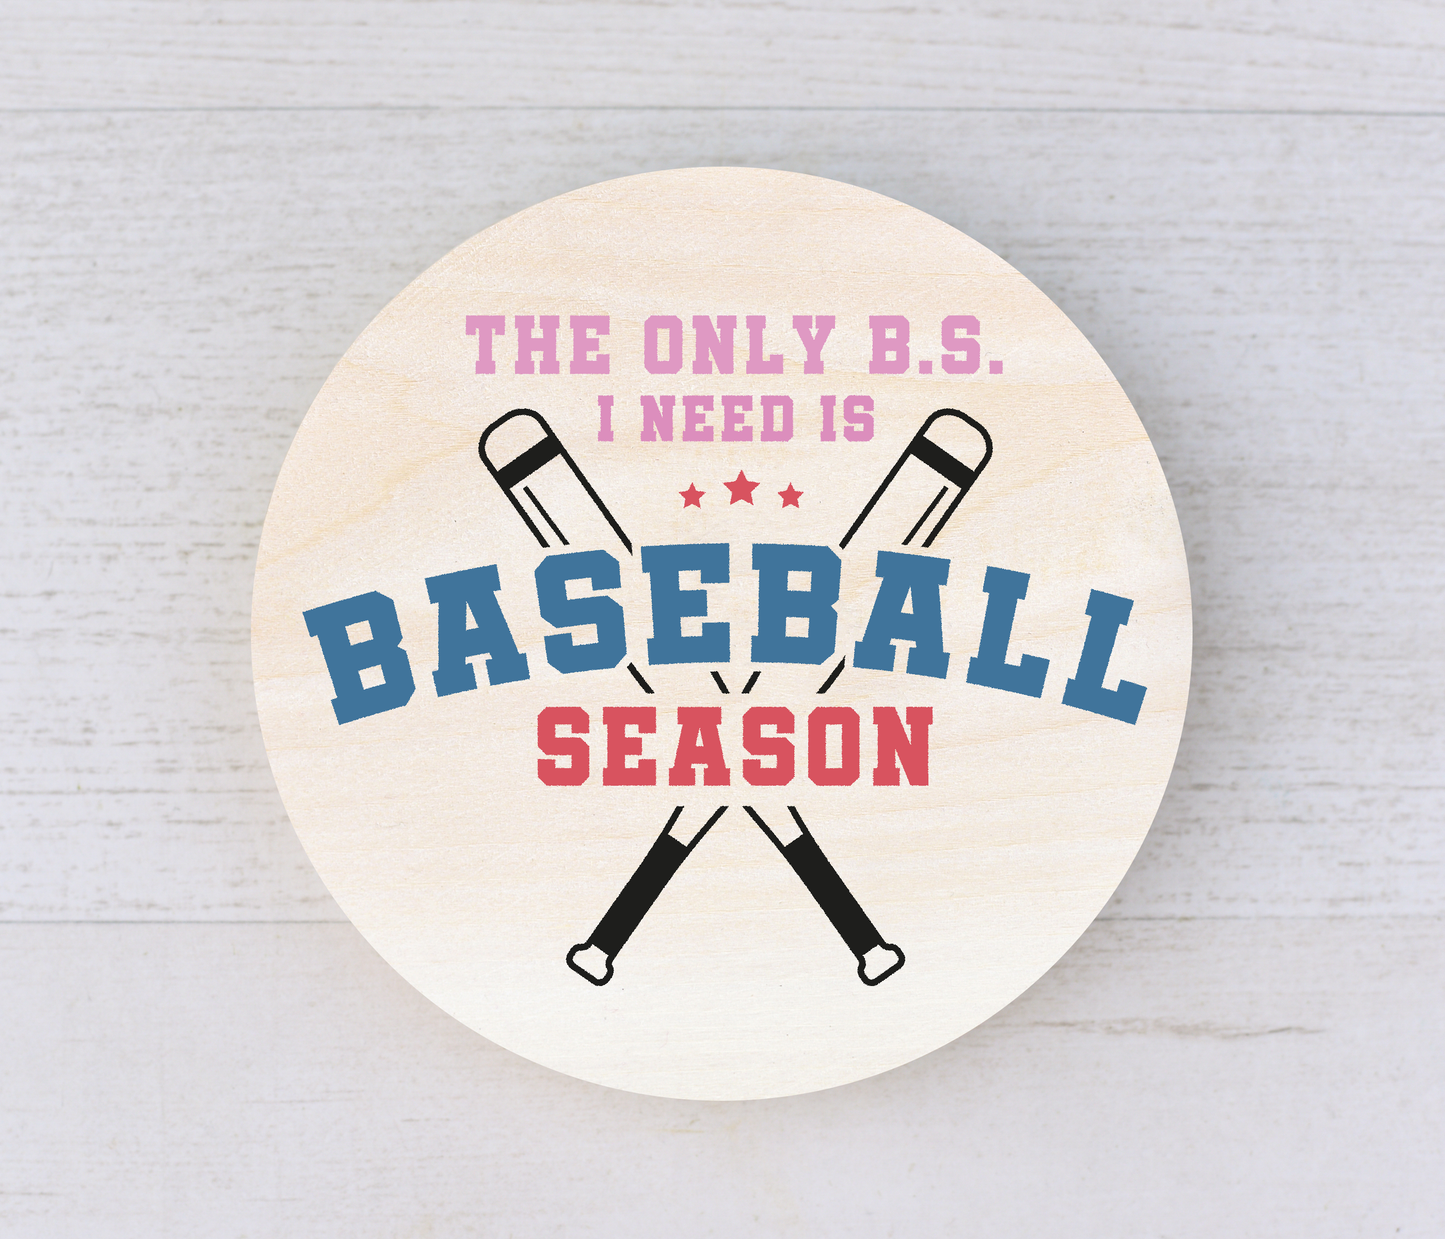 Swingin' Season: 12" Round "The Only B.S. I Need is Baseball Season" Painted Wood Sign